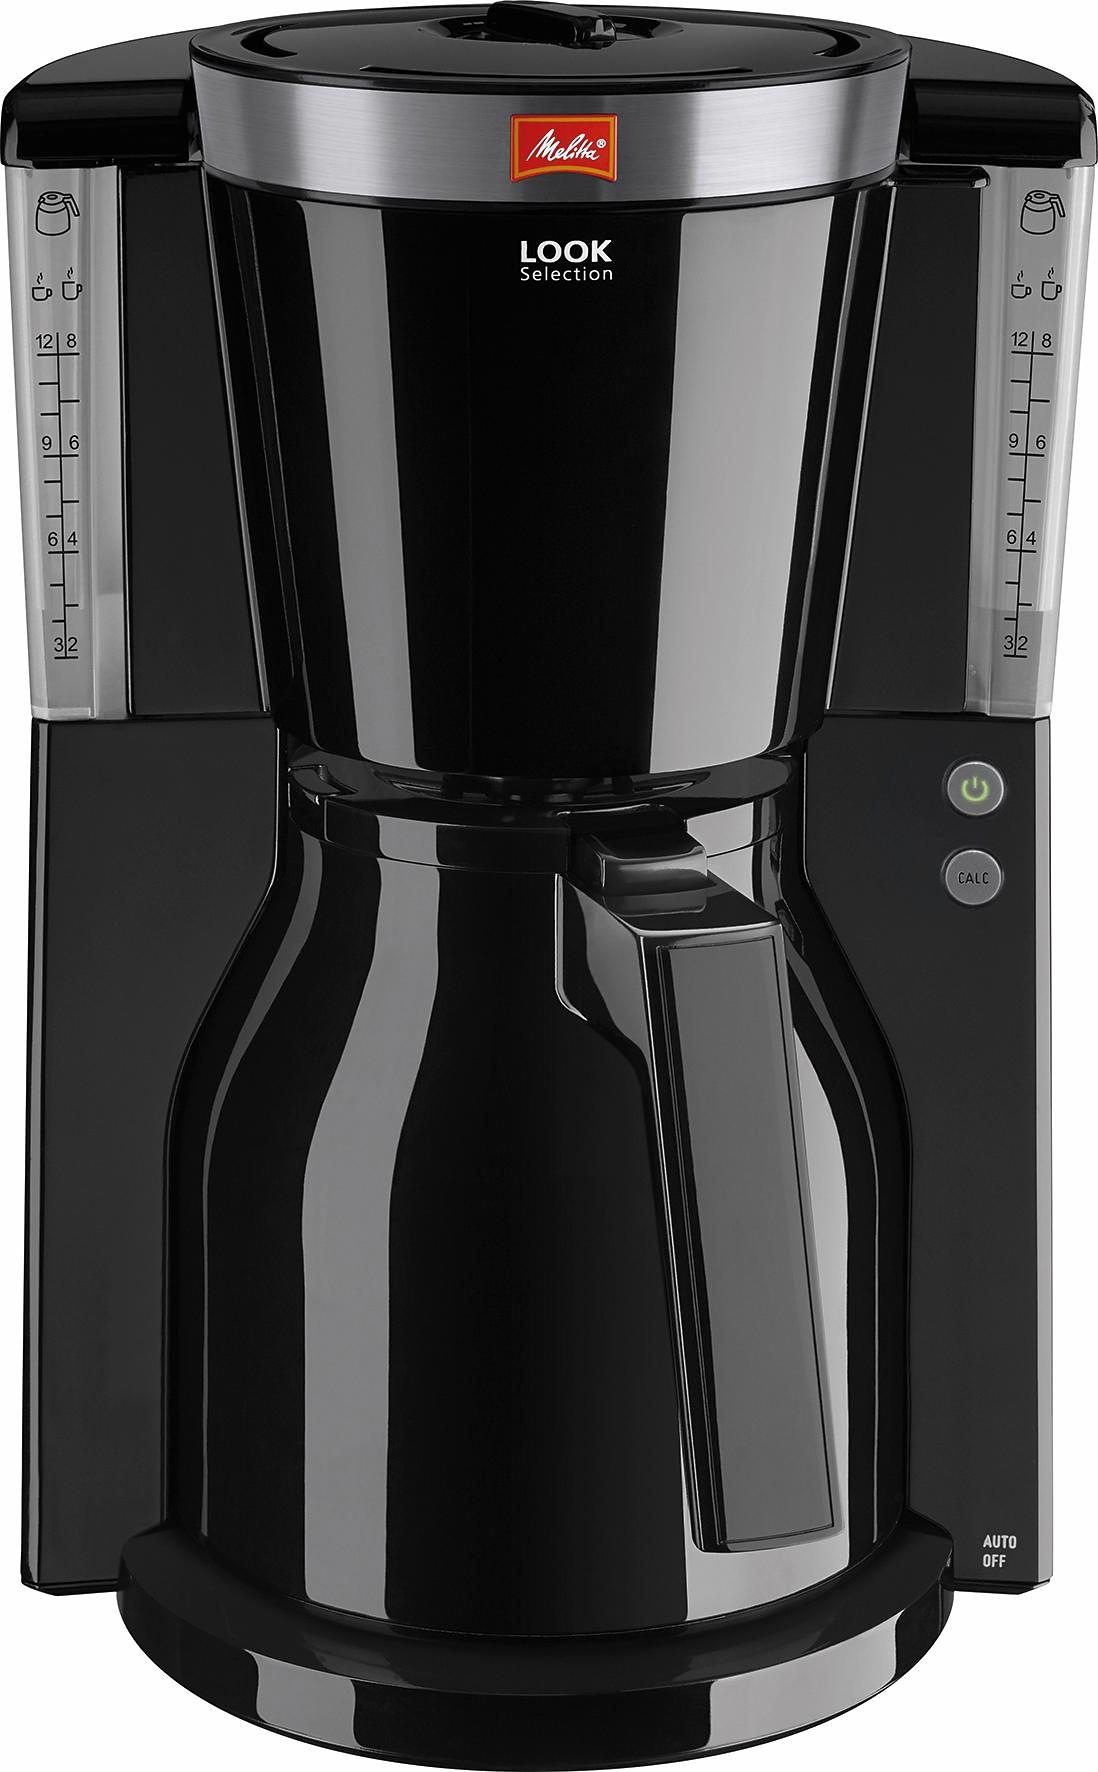 Melitta Melitta Koffiezetapparaat Look Therm Selectrion 1011-12, met thermoskan, zwart